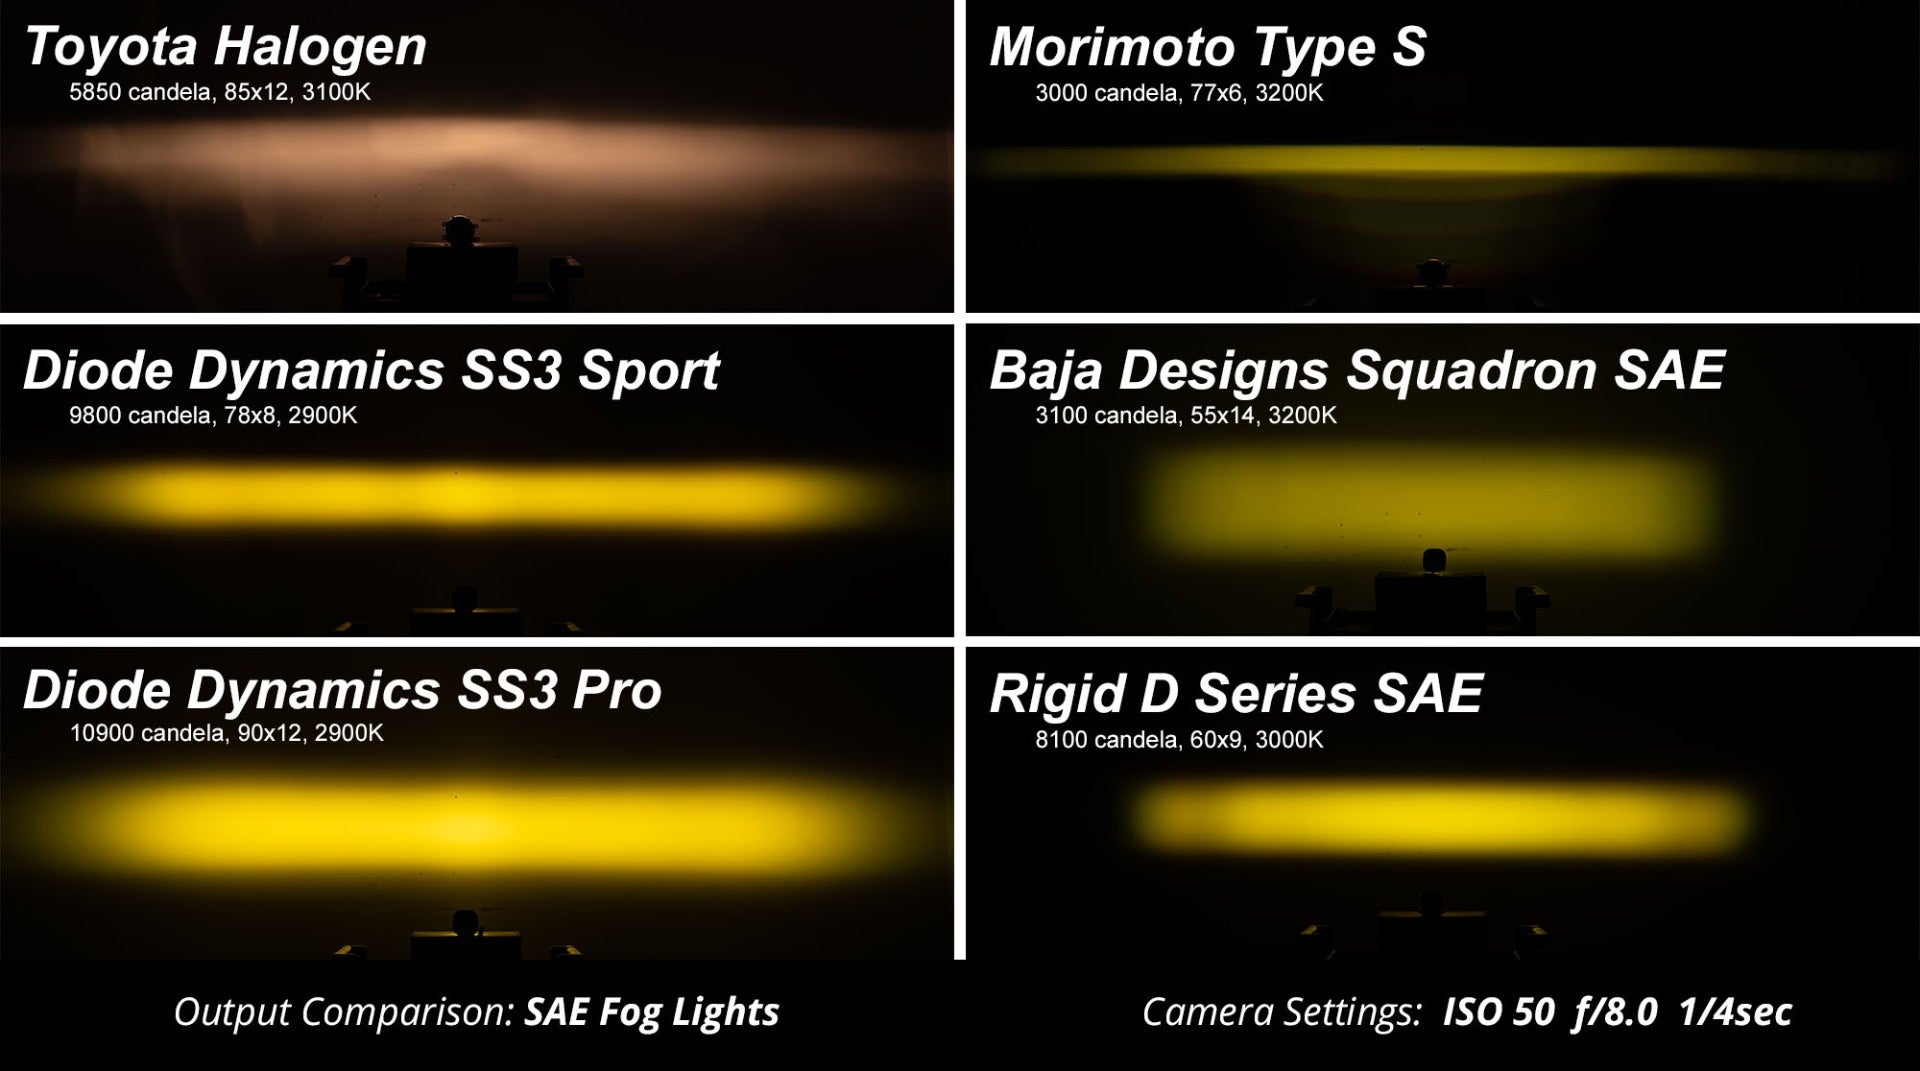 SS3 LED Fog Light Kit for 2015-2020 GMC Yukon, Yellow SAE Fog Max Diode Dynamics